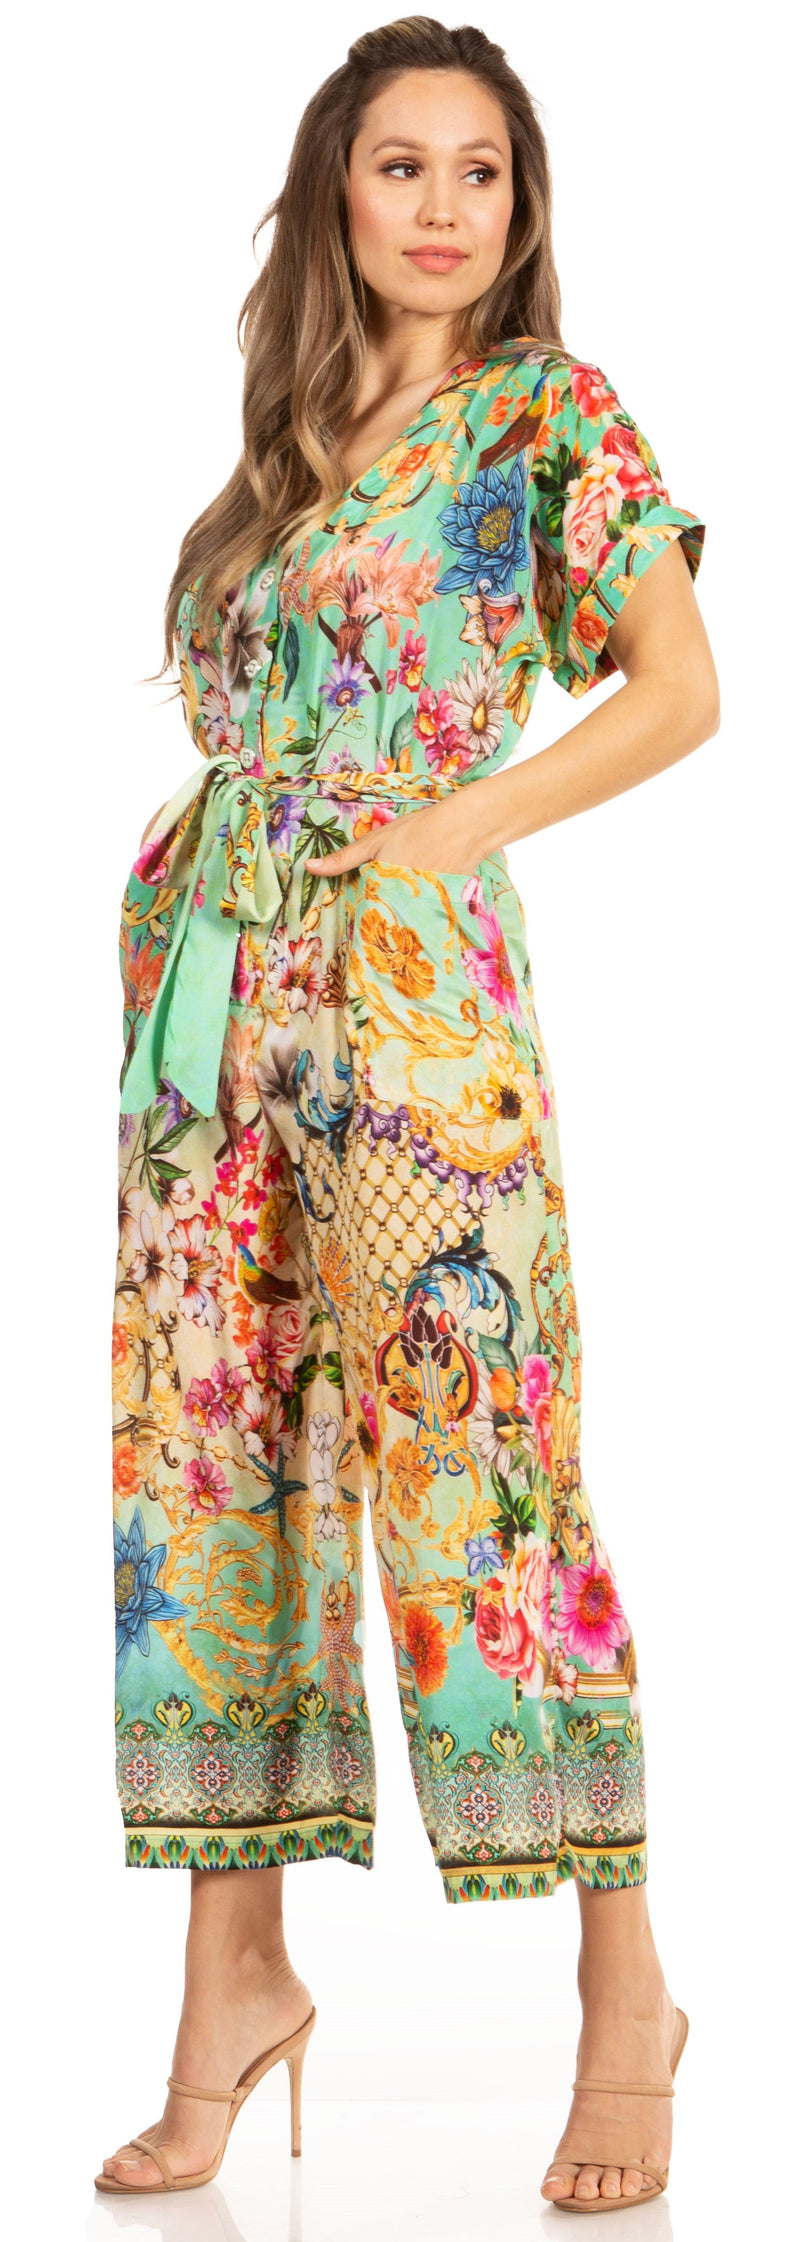 Sakkas Irise Women's Short Sleeve V neck Floral Print Casual Boho Jumsuit Pockets